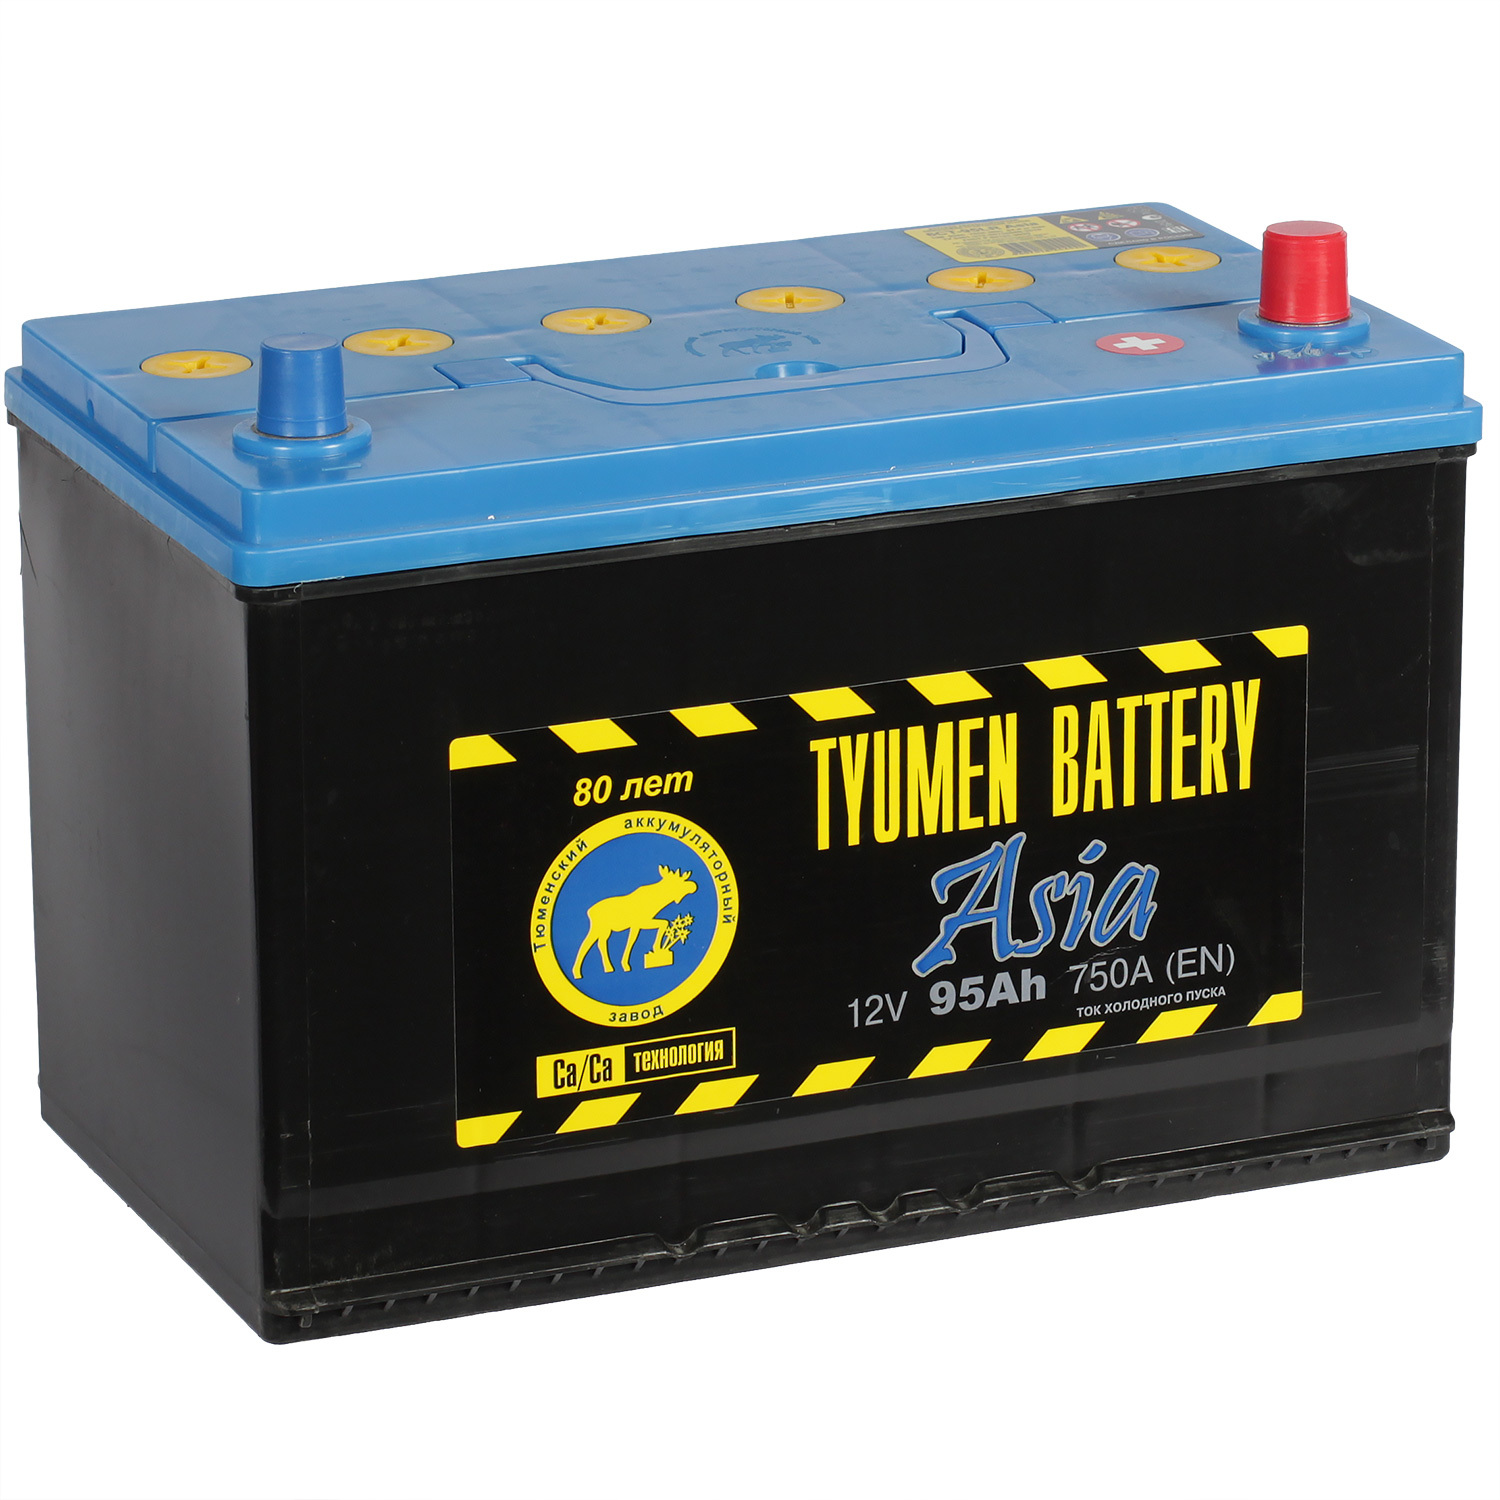 Tyumen Battery Автомобильный аккумулятор Tyumen Battery 95 Ач обратная полярность D31L аккумуляторная батарея bm44 для xiaomi redmi 2 аккумулятор акб батарейка bm 44 redmi2 xiaomiredmi2